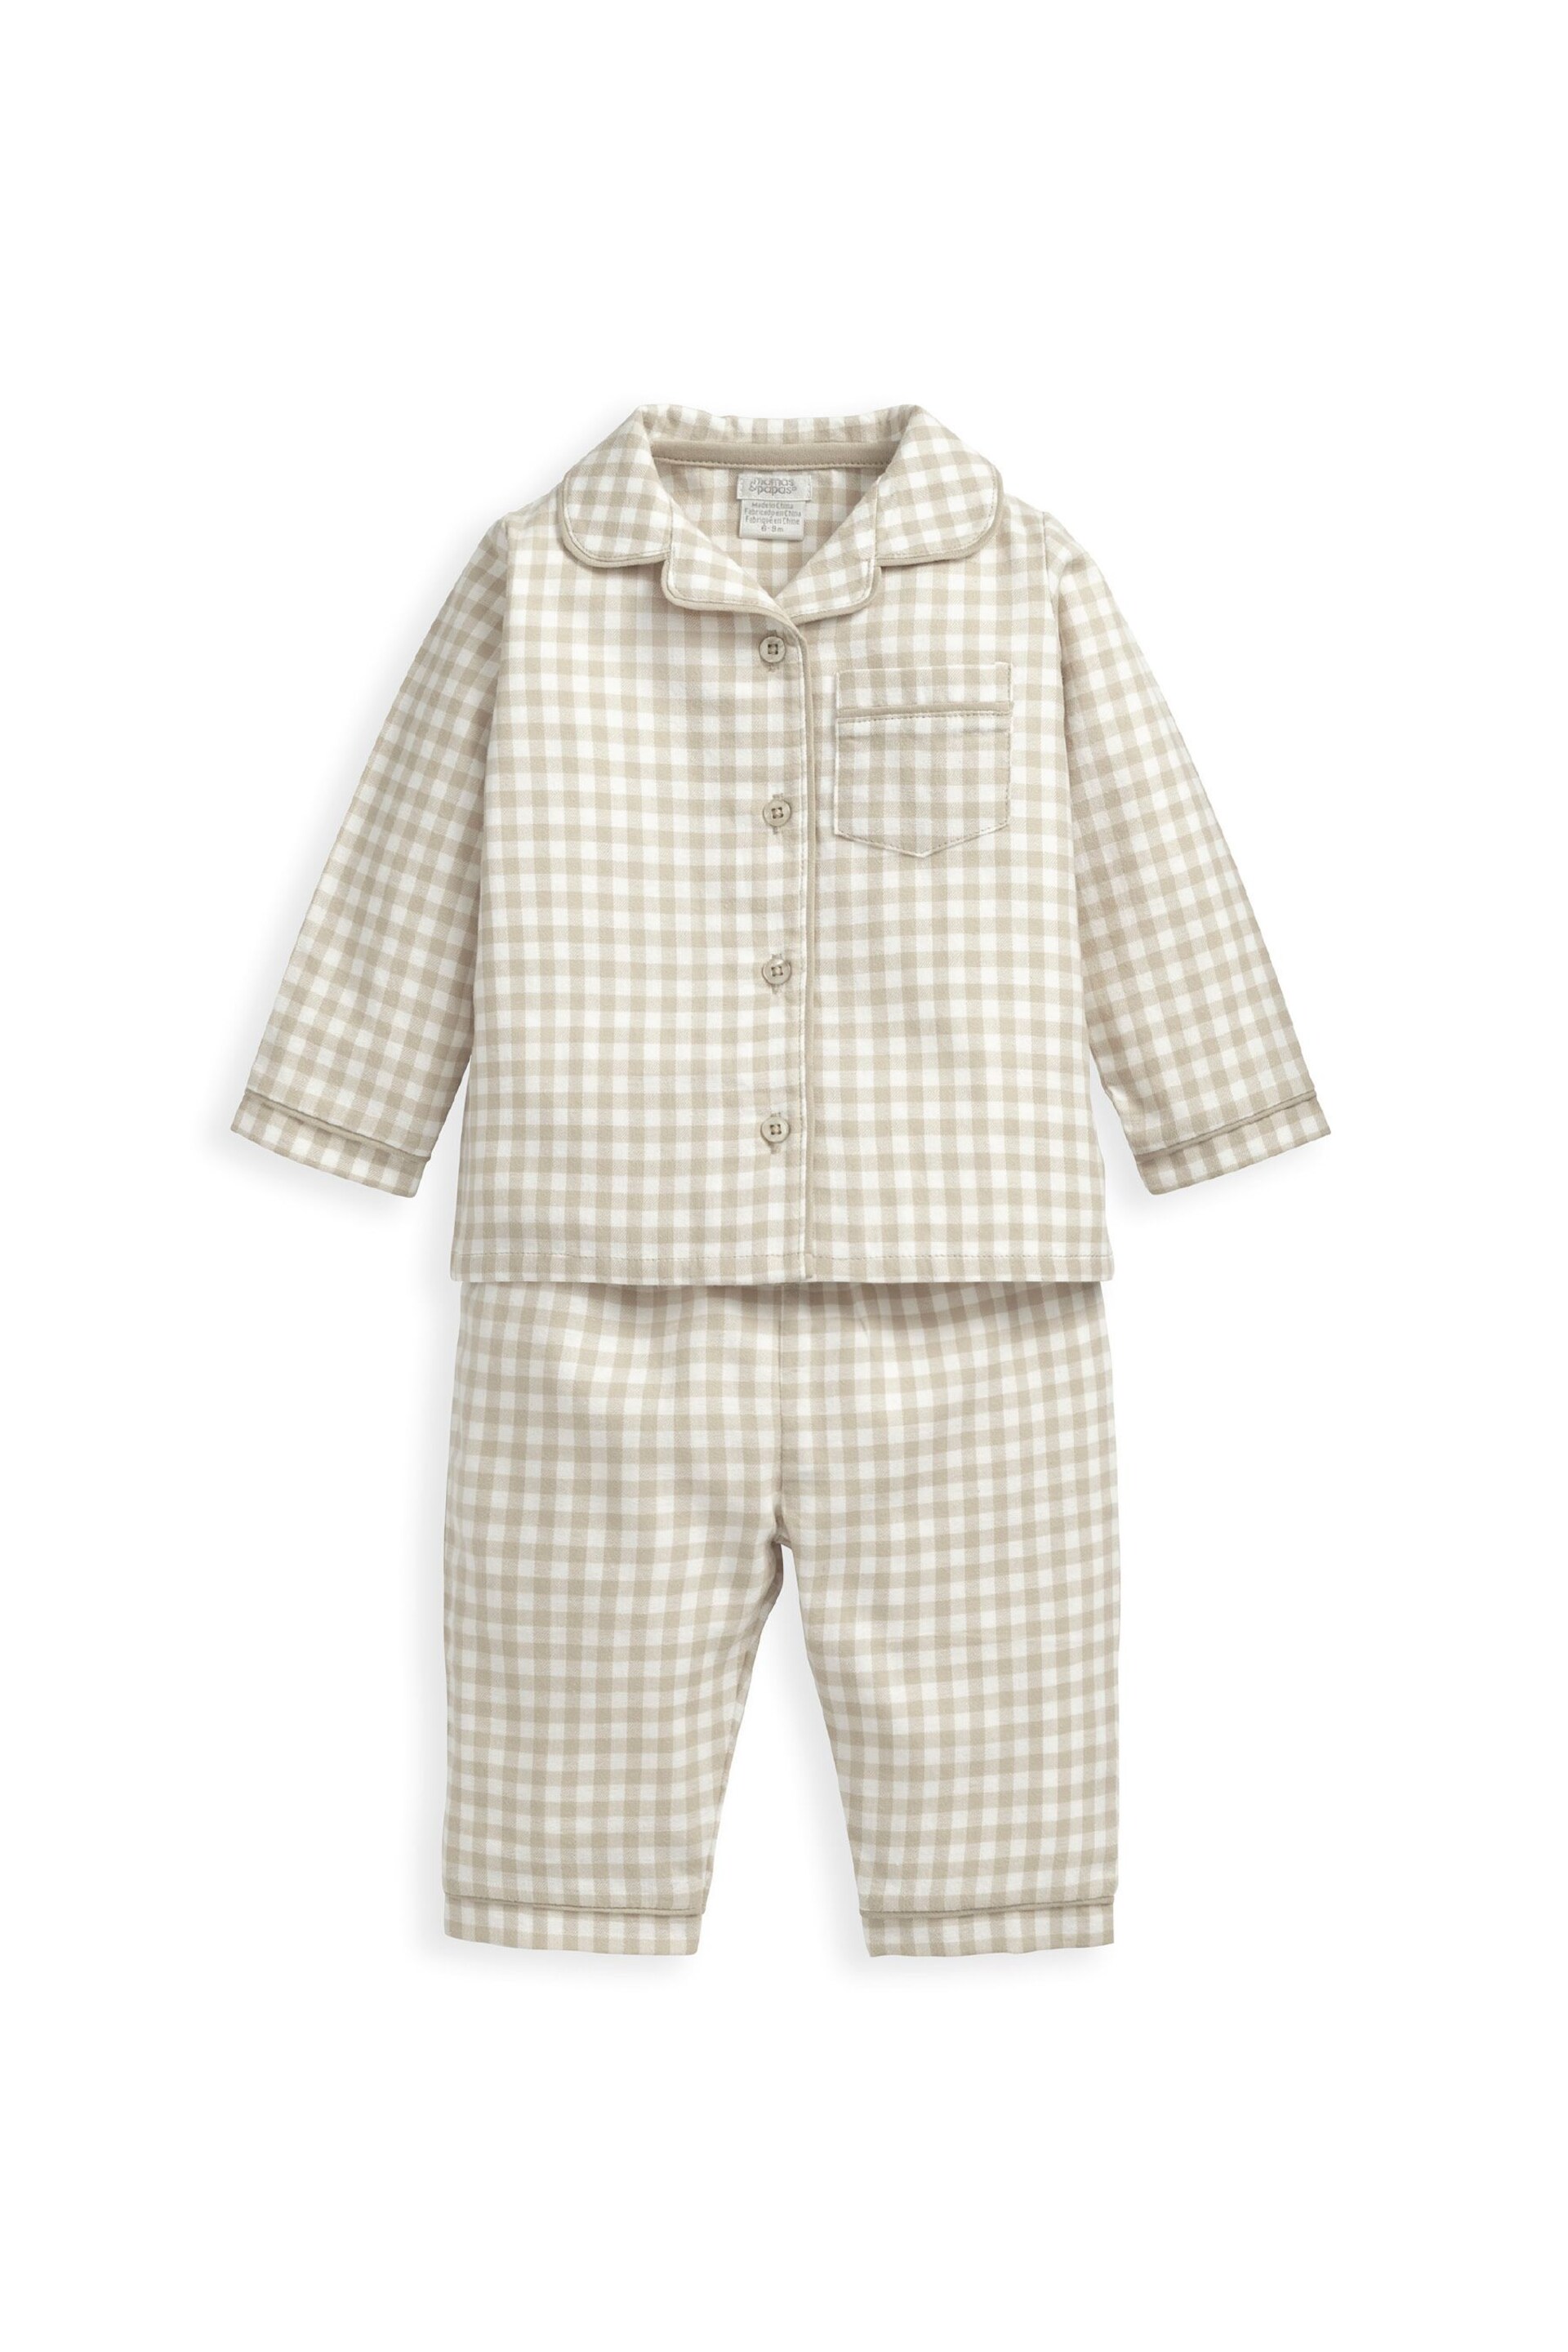 Mamas & Papas Sand Check Woven Brown Pyjamas - Image 2 of 4